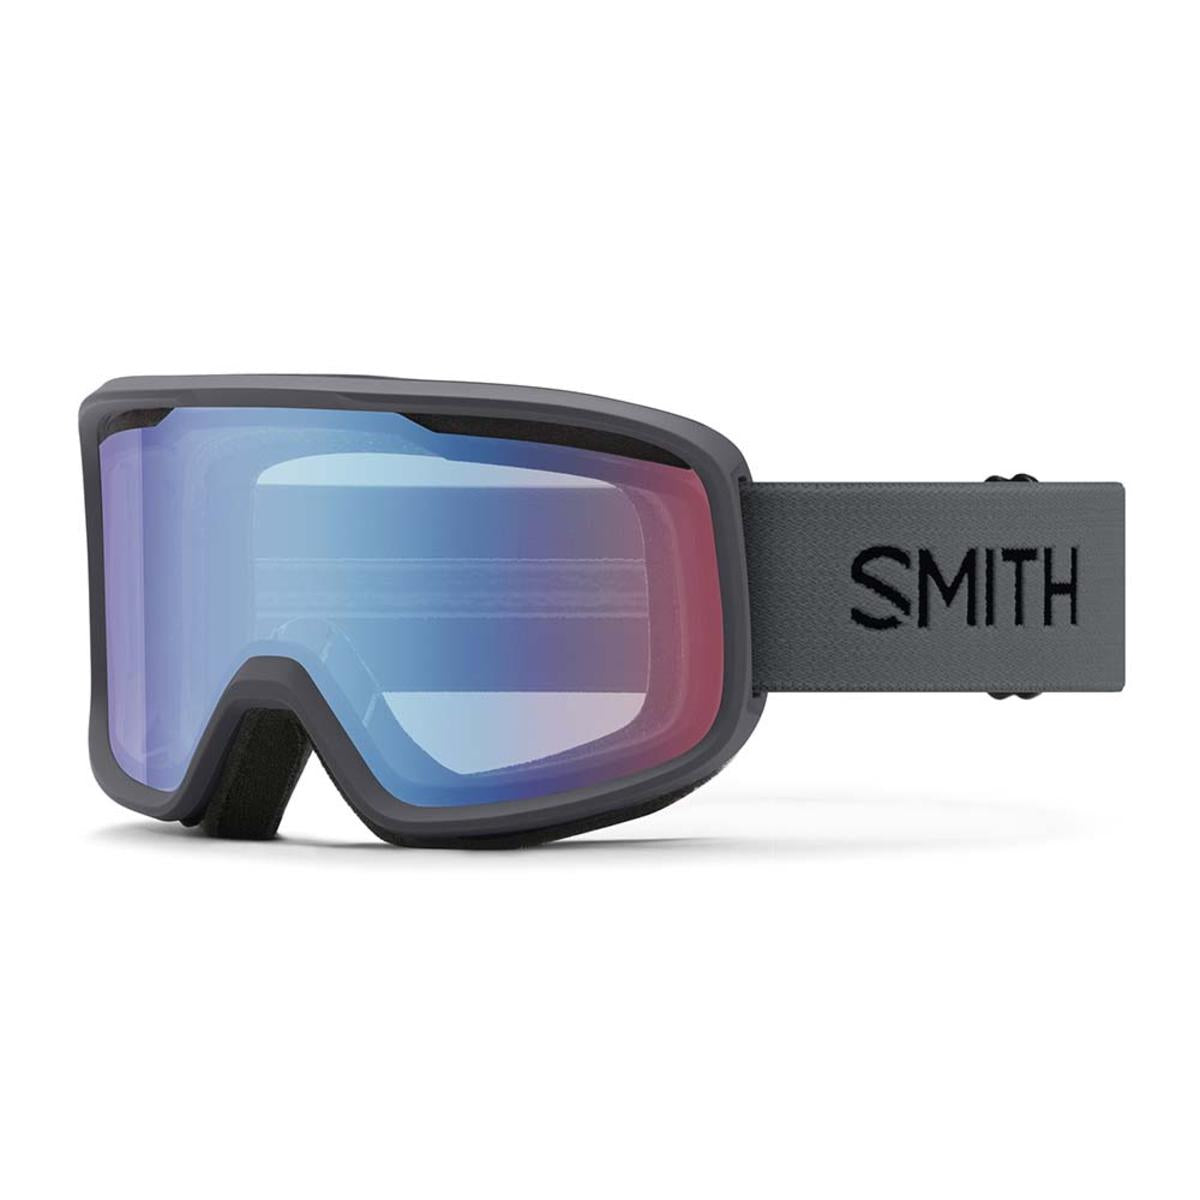 Smith Optics Frontier Goggles Blue Sensor Mirror - Charcoal Frame